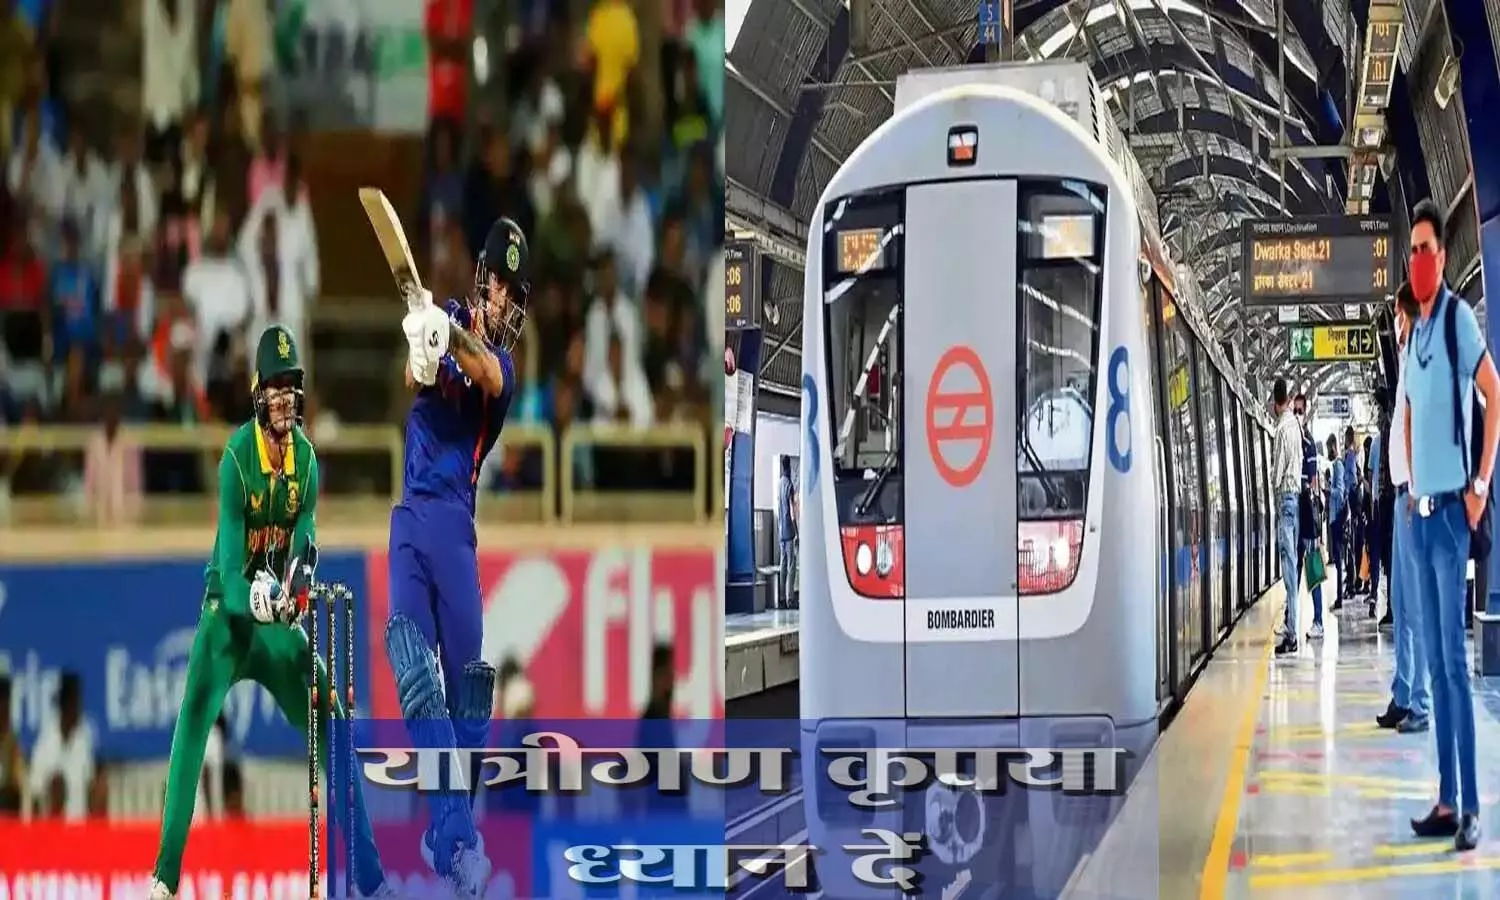 Delhi Metro: Delhi Metro has increased train timings due to IND vs SA match, good news for cricket fans